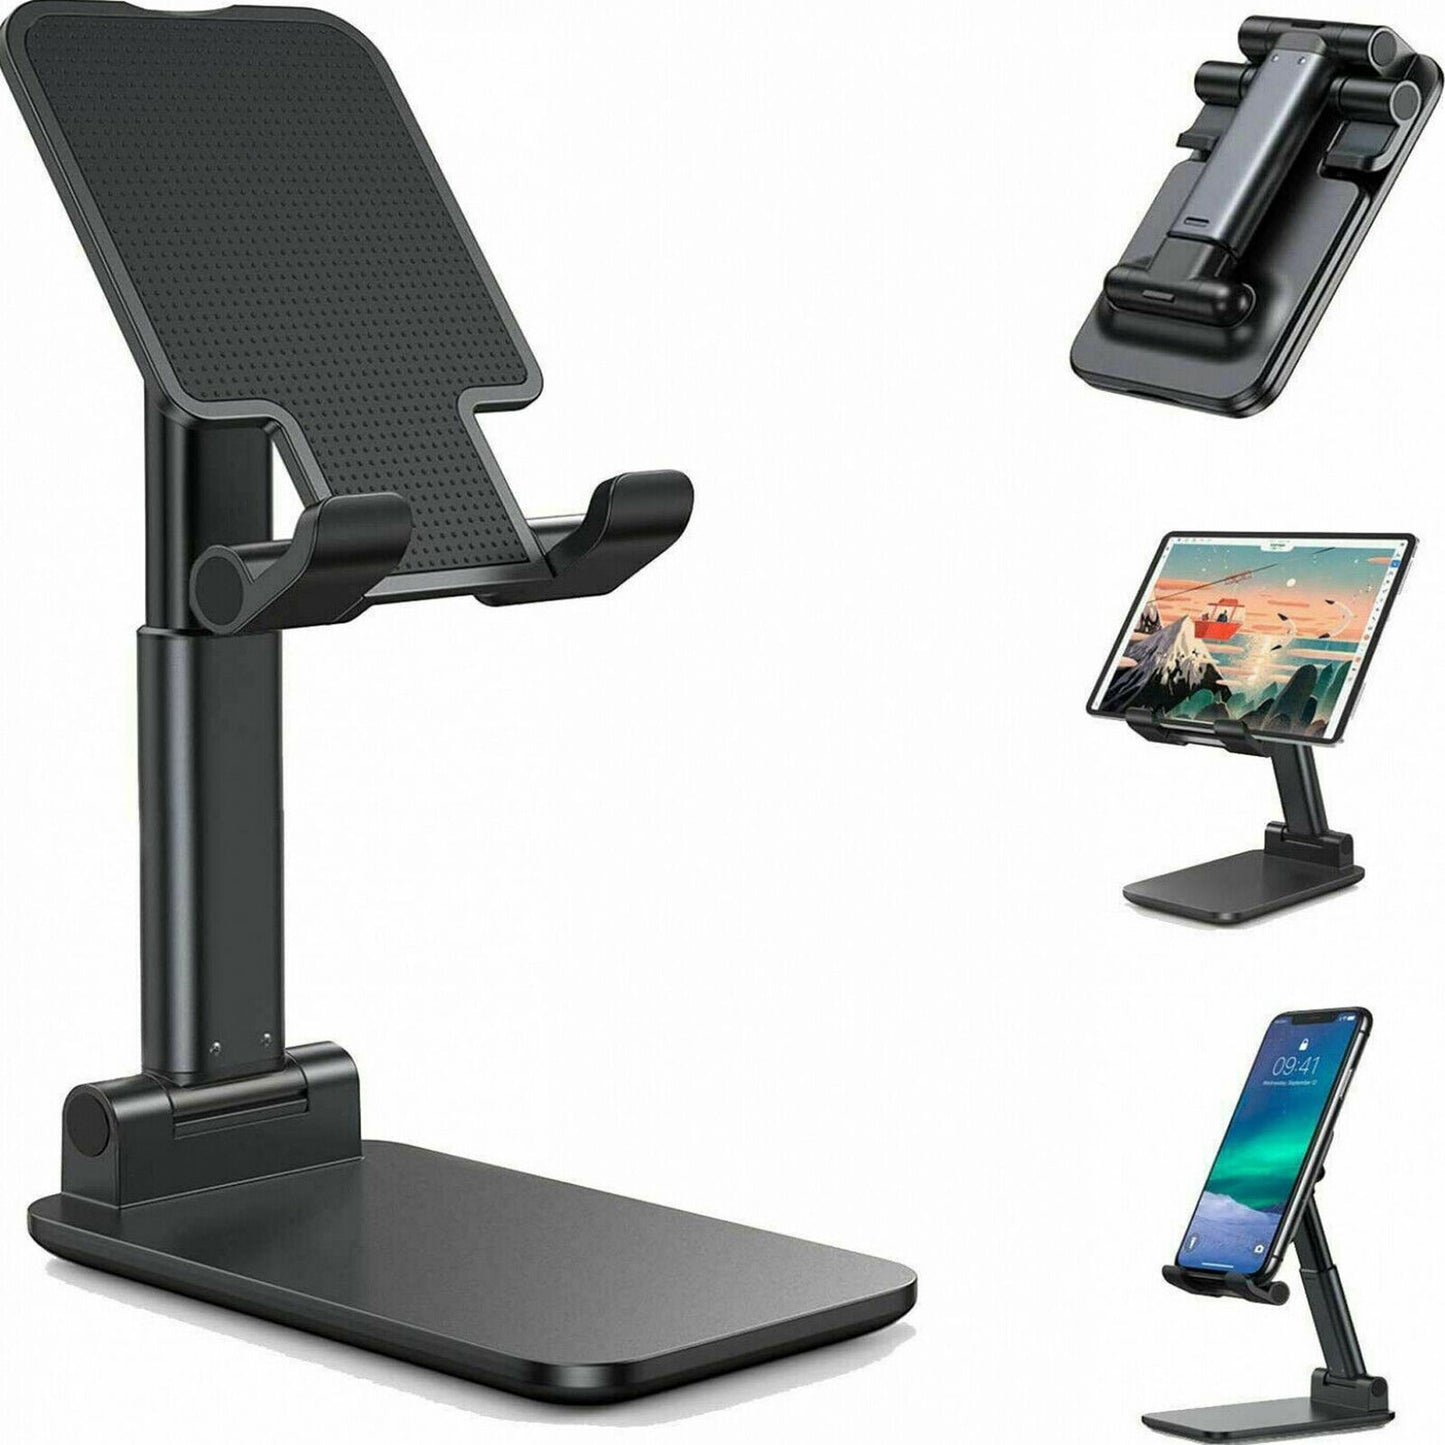 Cell Phone Stand Desktop Holder Tablet Stand Mount Mobile Phone Holder Stand